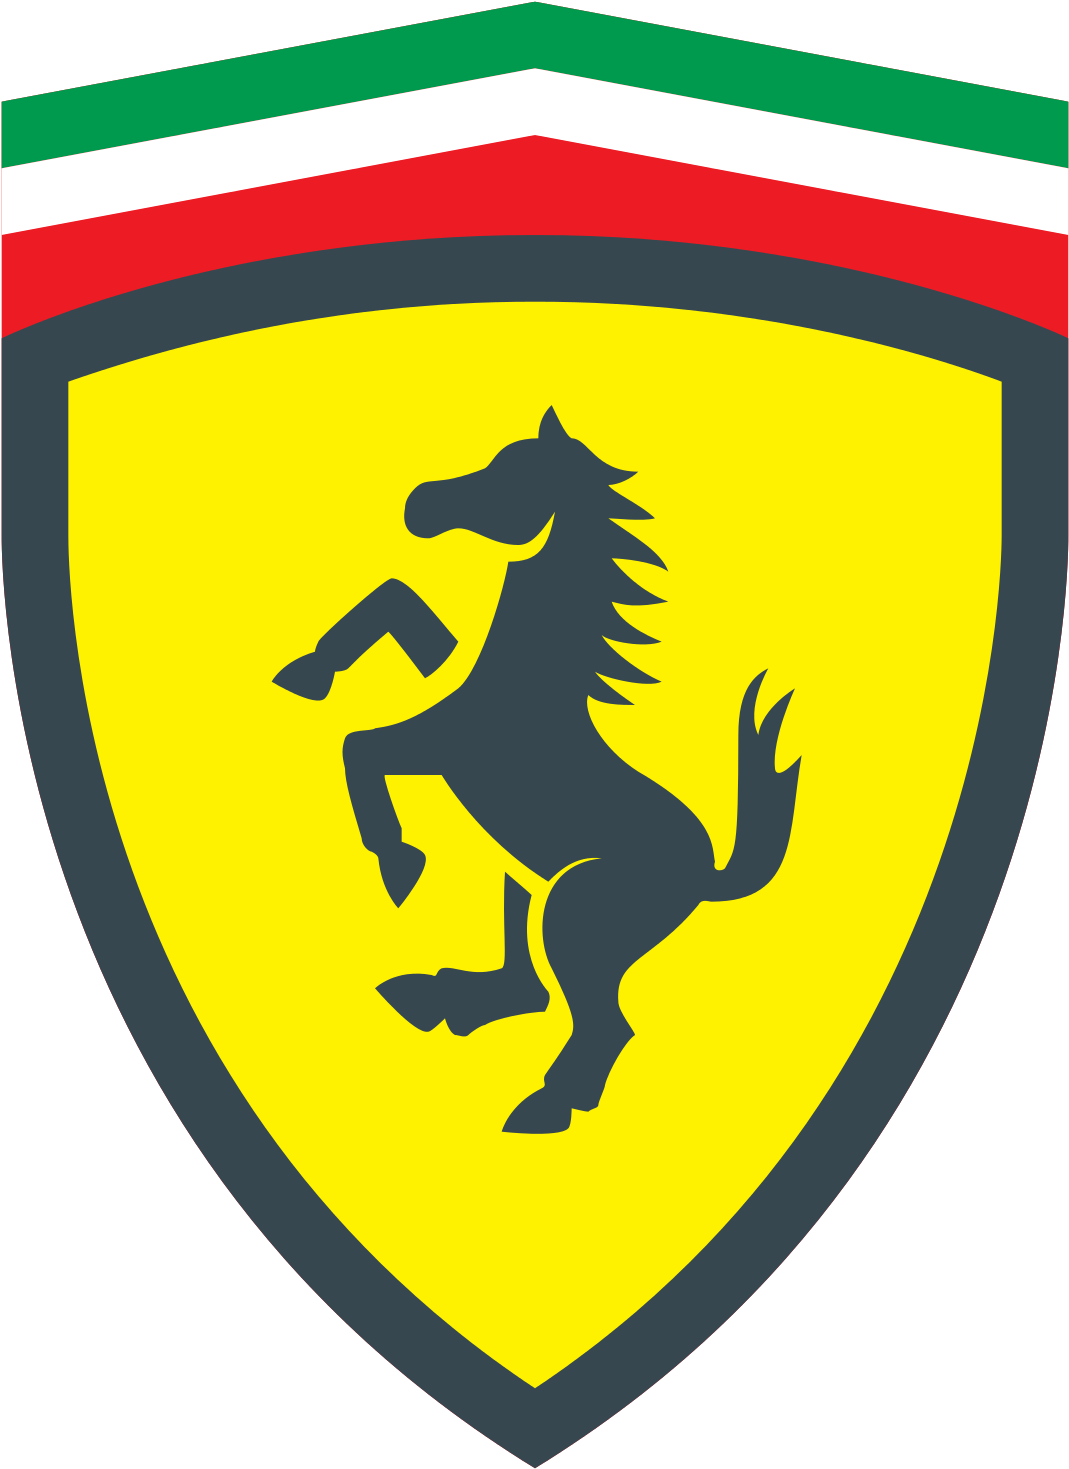 Ferrari Prancing Horse Logo